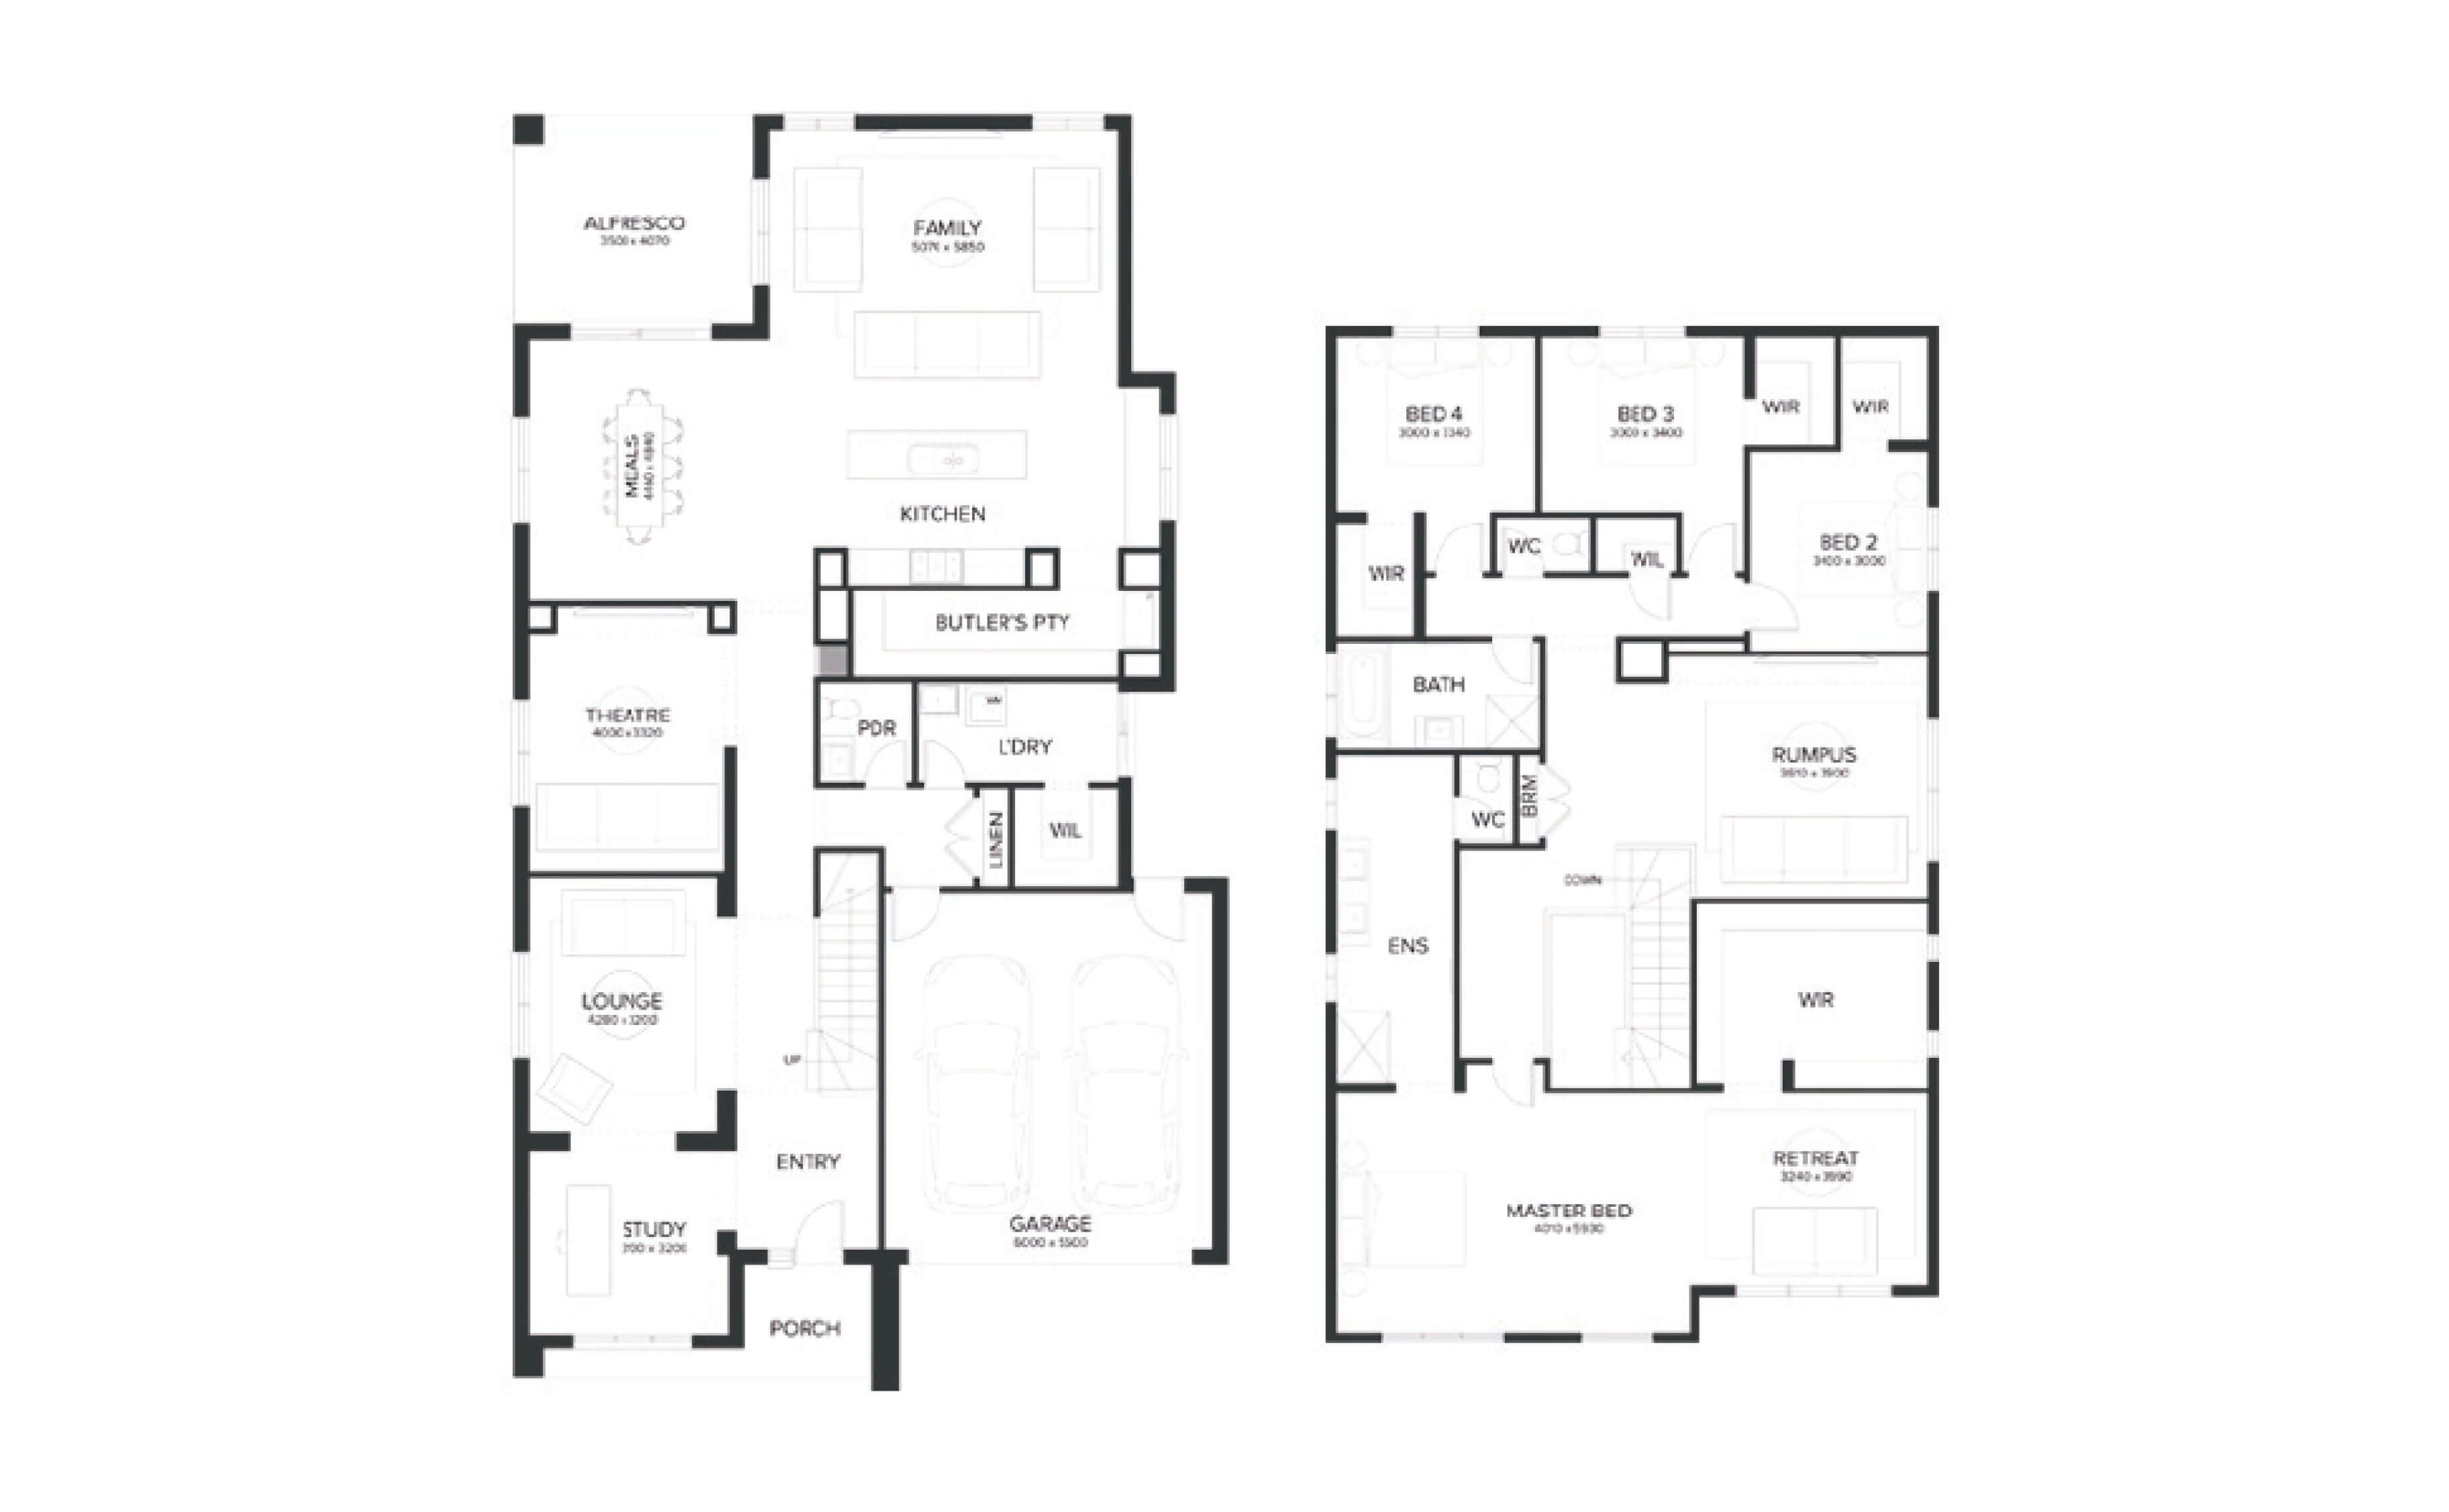 Lot /img/house-land/3016-montrose/Floorplan/Thumb.jpg floorplan